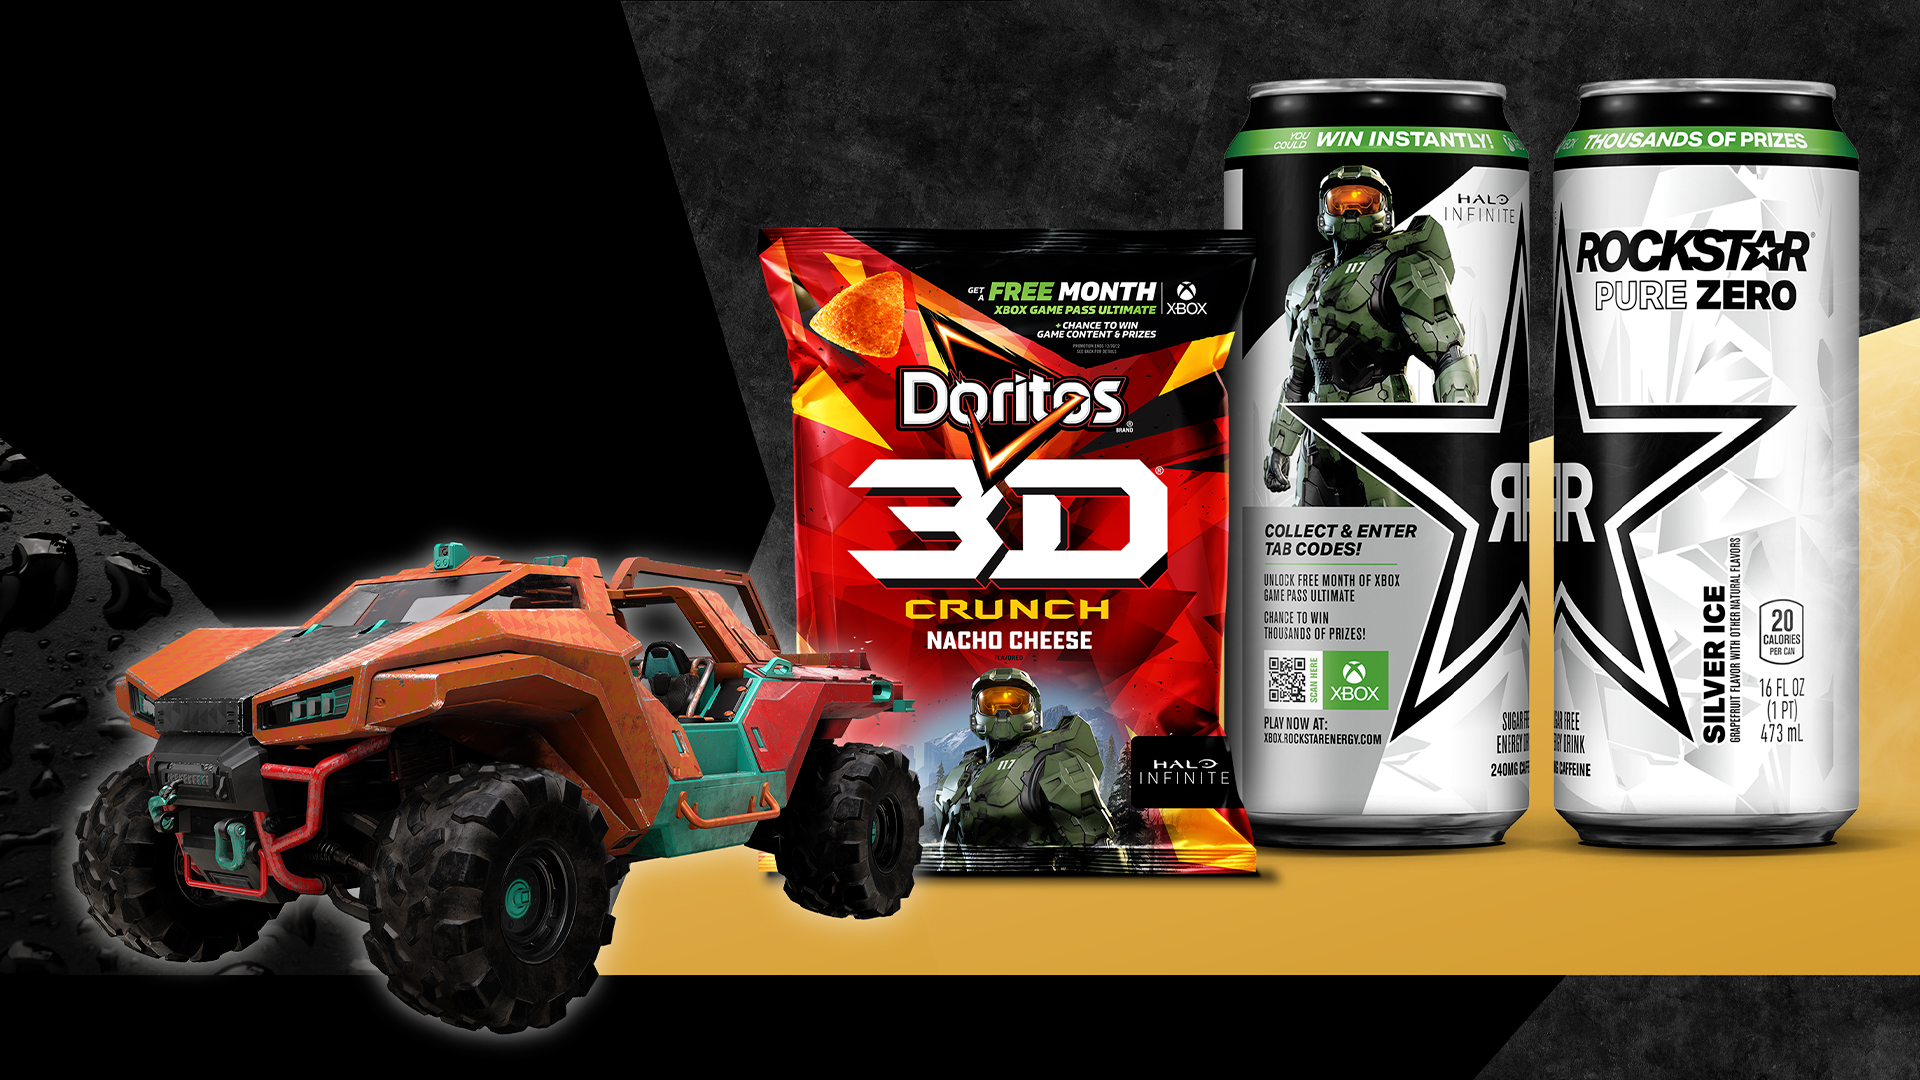 Image of Halo & Doritos/Rockstar partnership